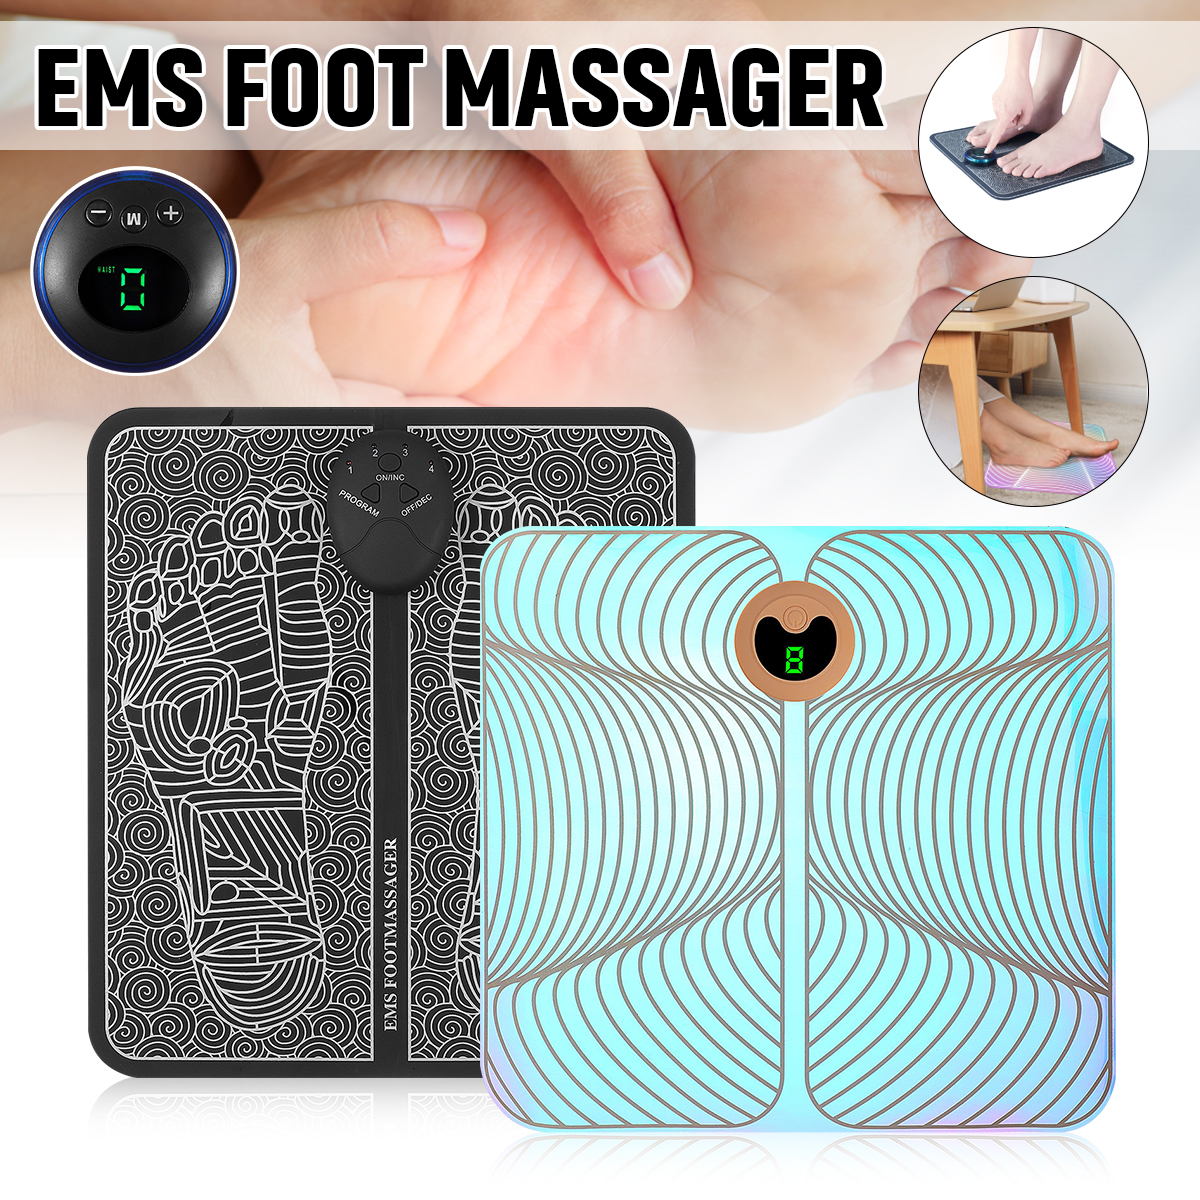 EMS-Physiotherapy-Foot-Massage-Mat-6-Modes-9-Levels-Portable-Leg-Blood-Circulation-Massager-Relax-De-1891903-1